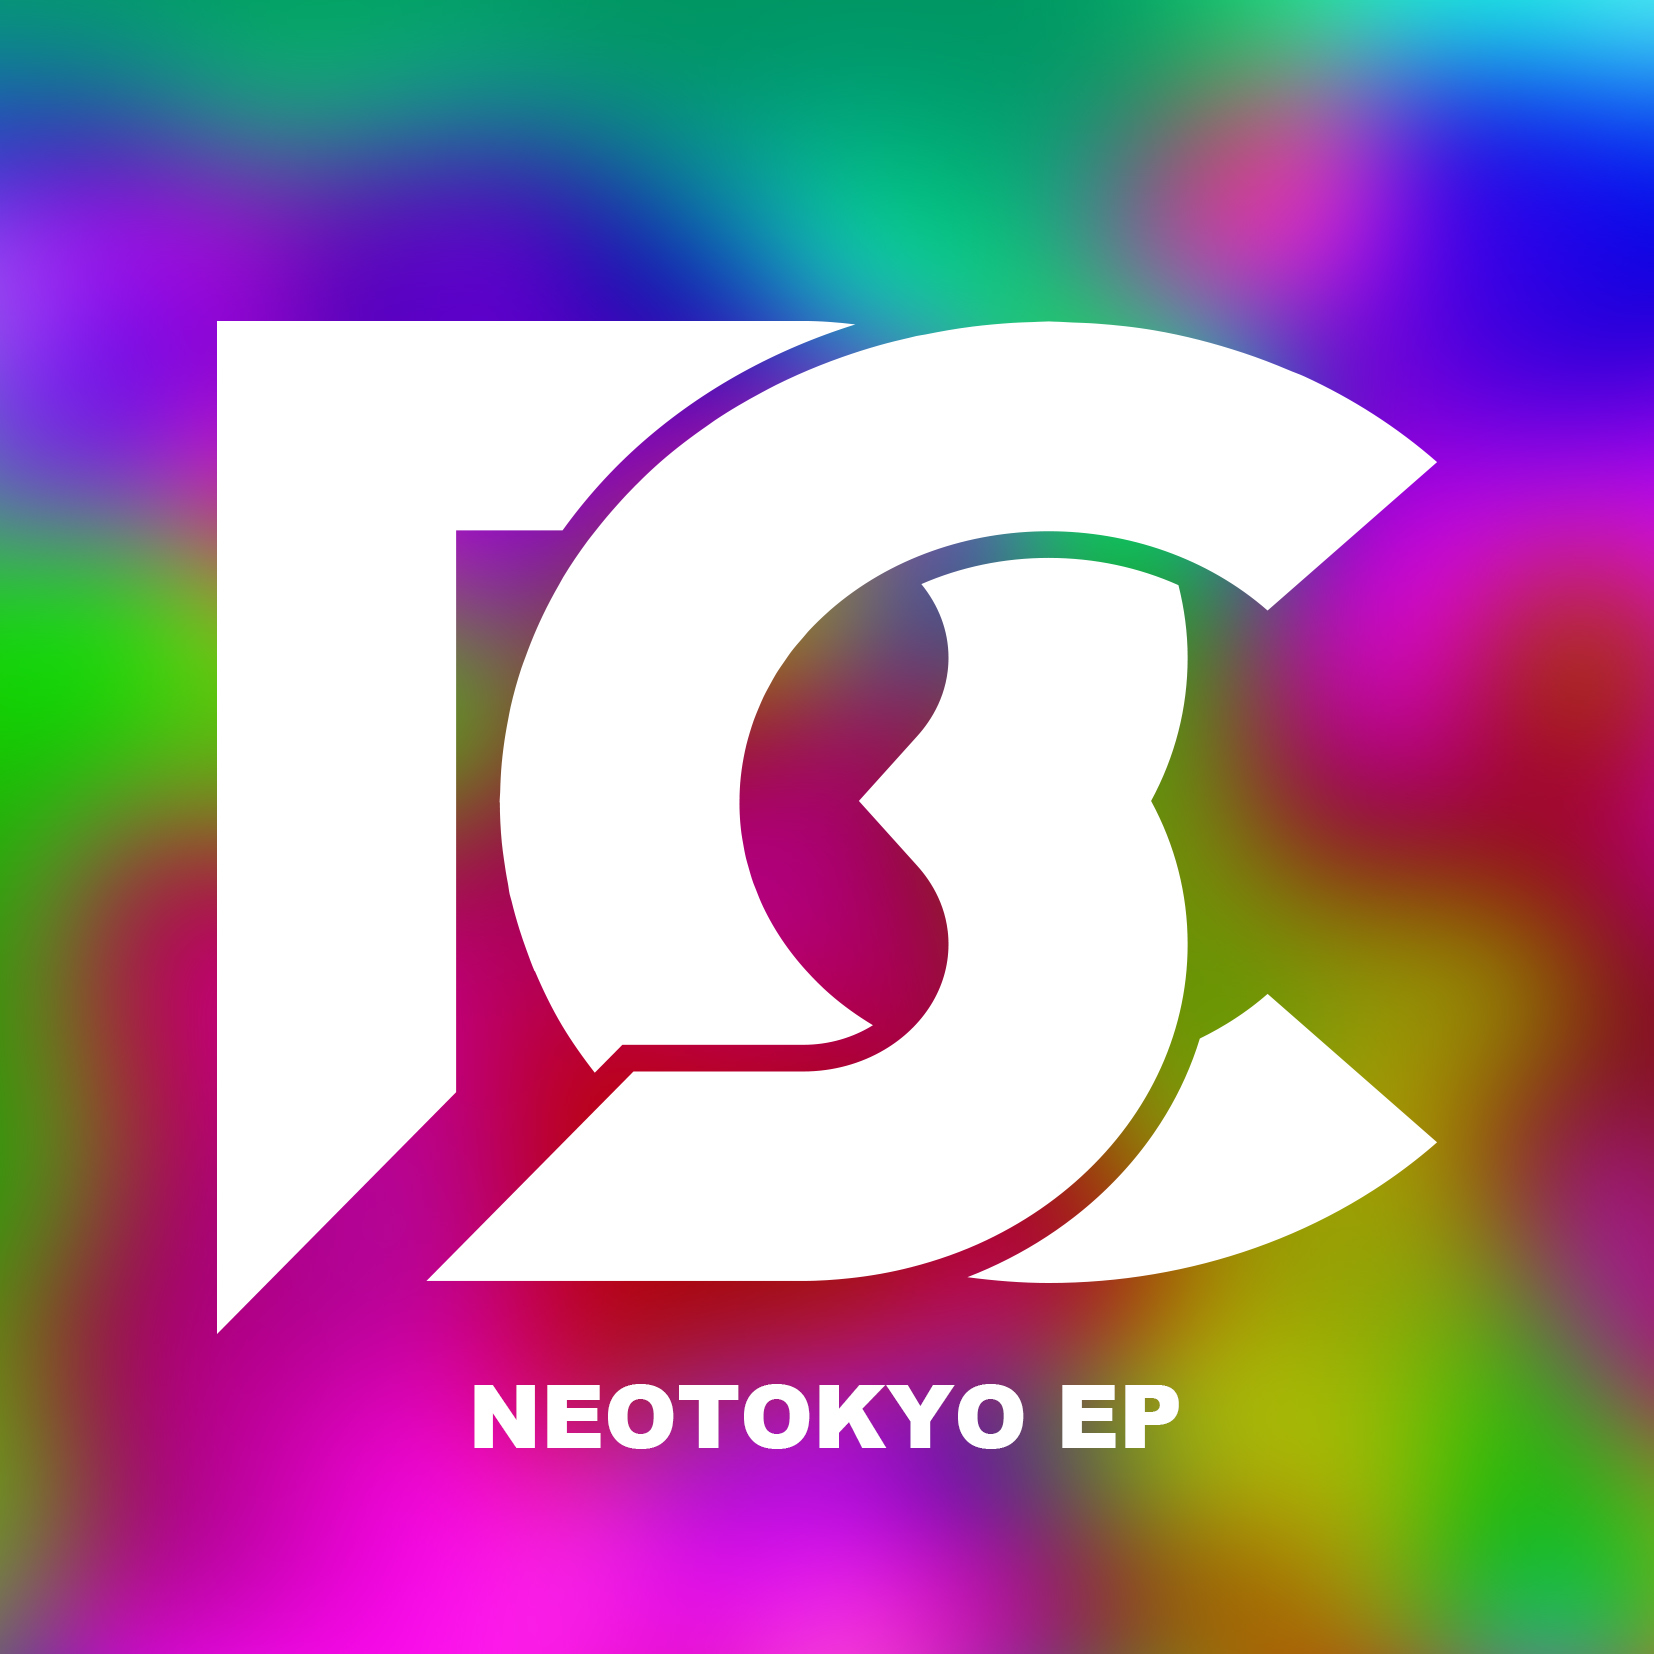 NEO TOKYO EP